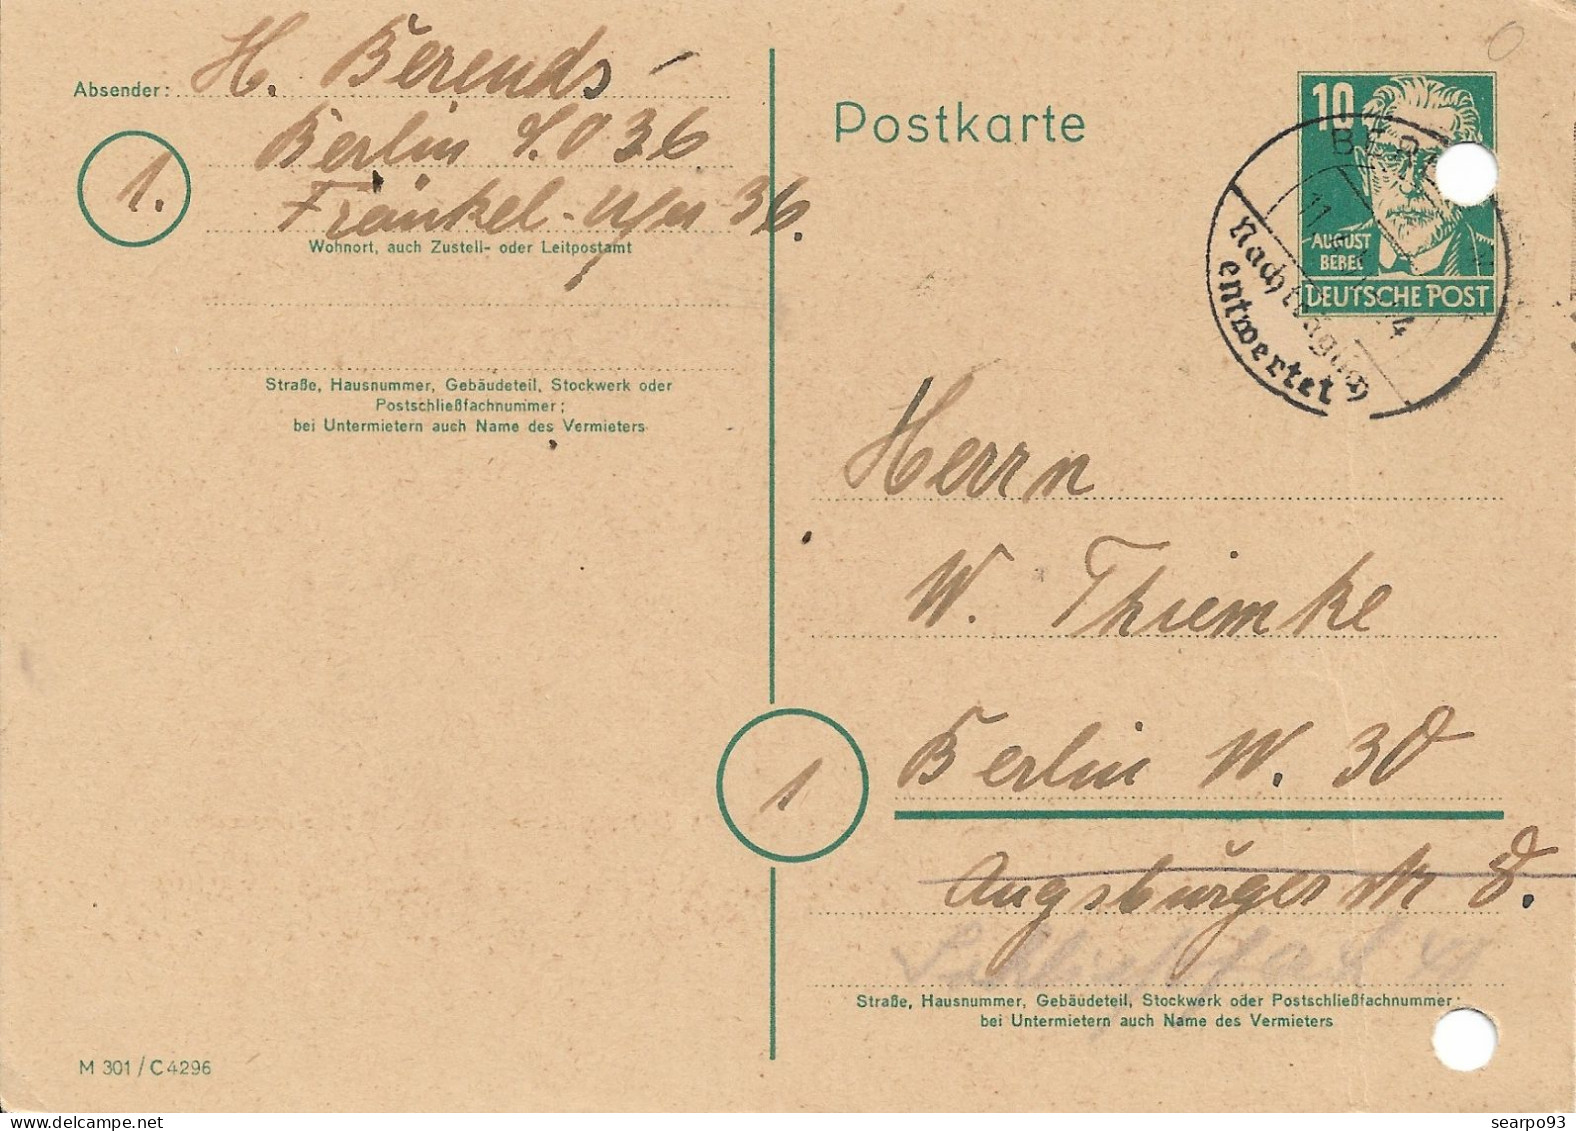 GERMANY. POSTAL STATIONERY, 1951 - Postcards - Used